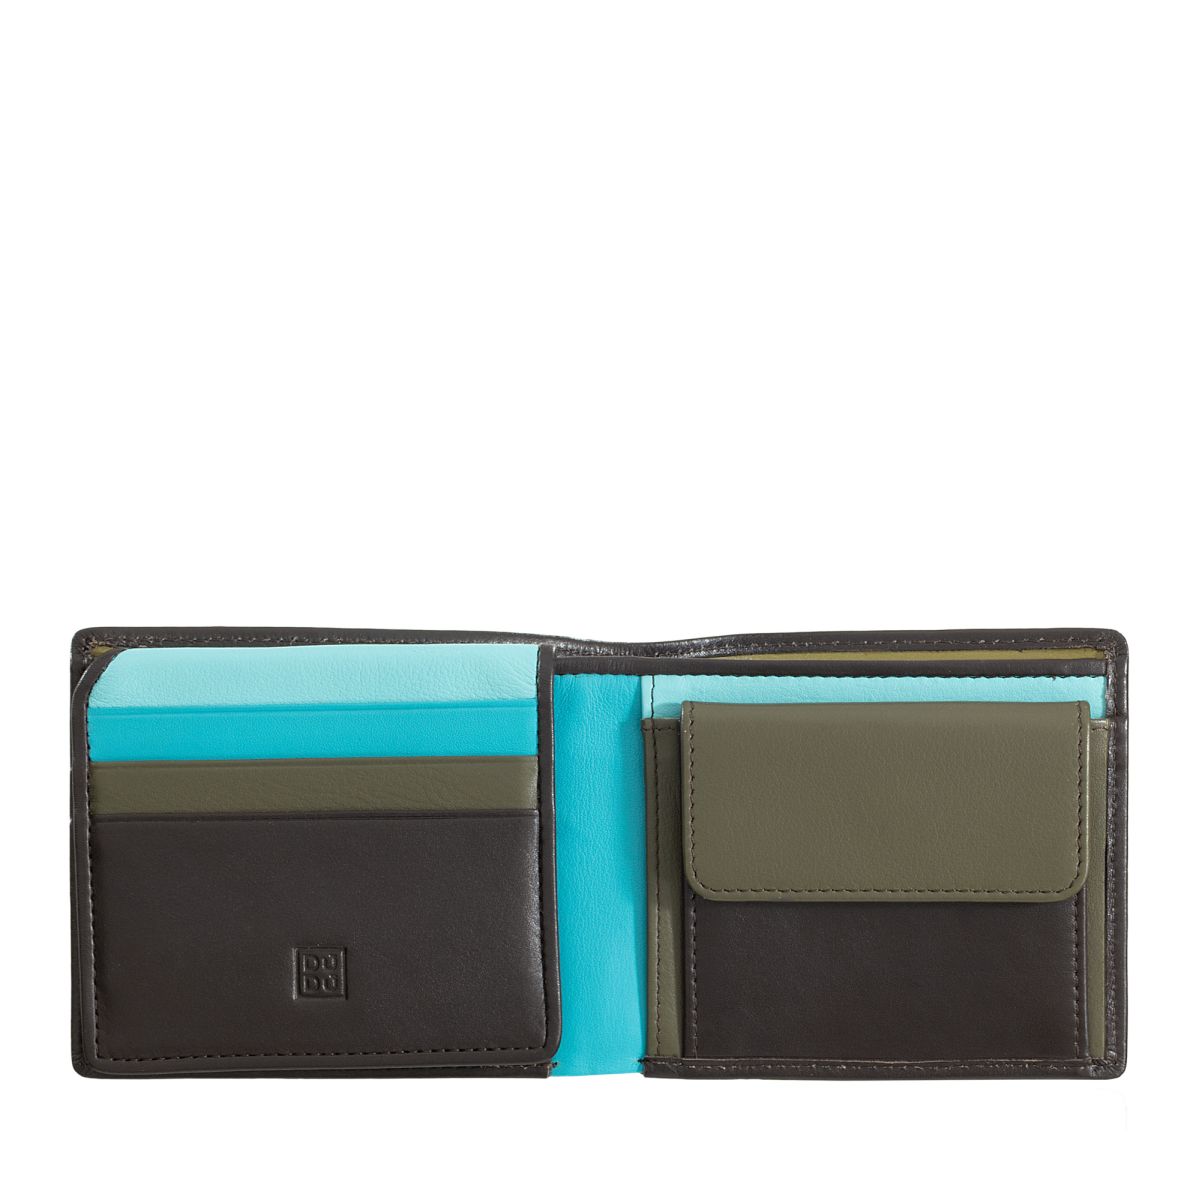 Mans genuine leather wallet - Brown